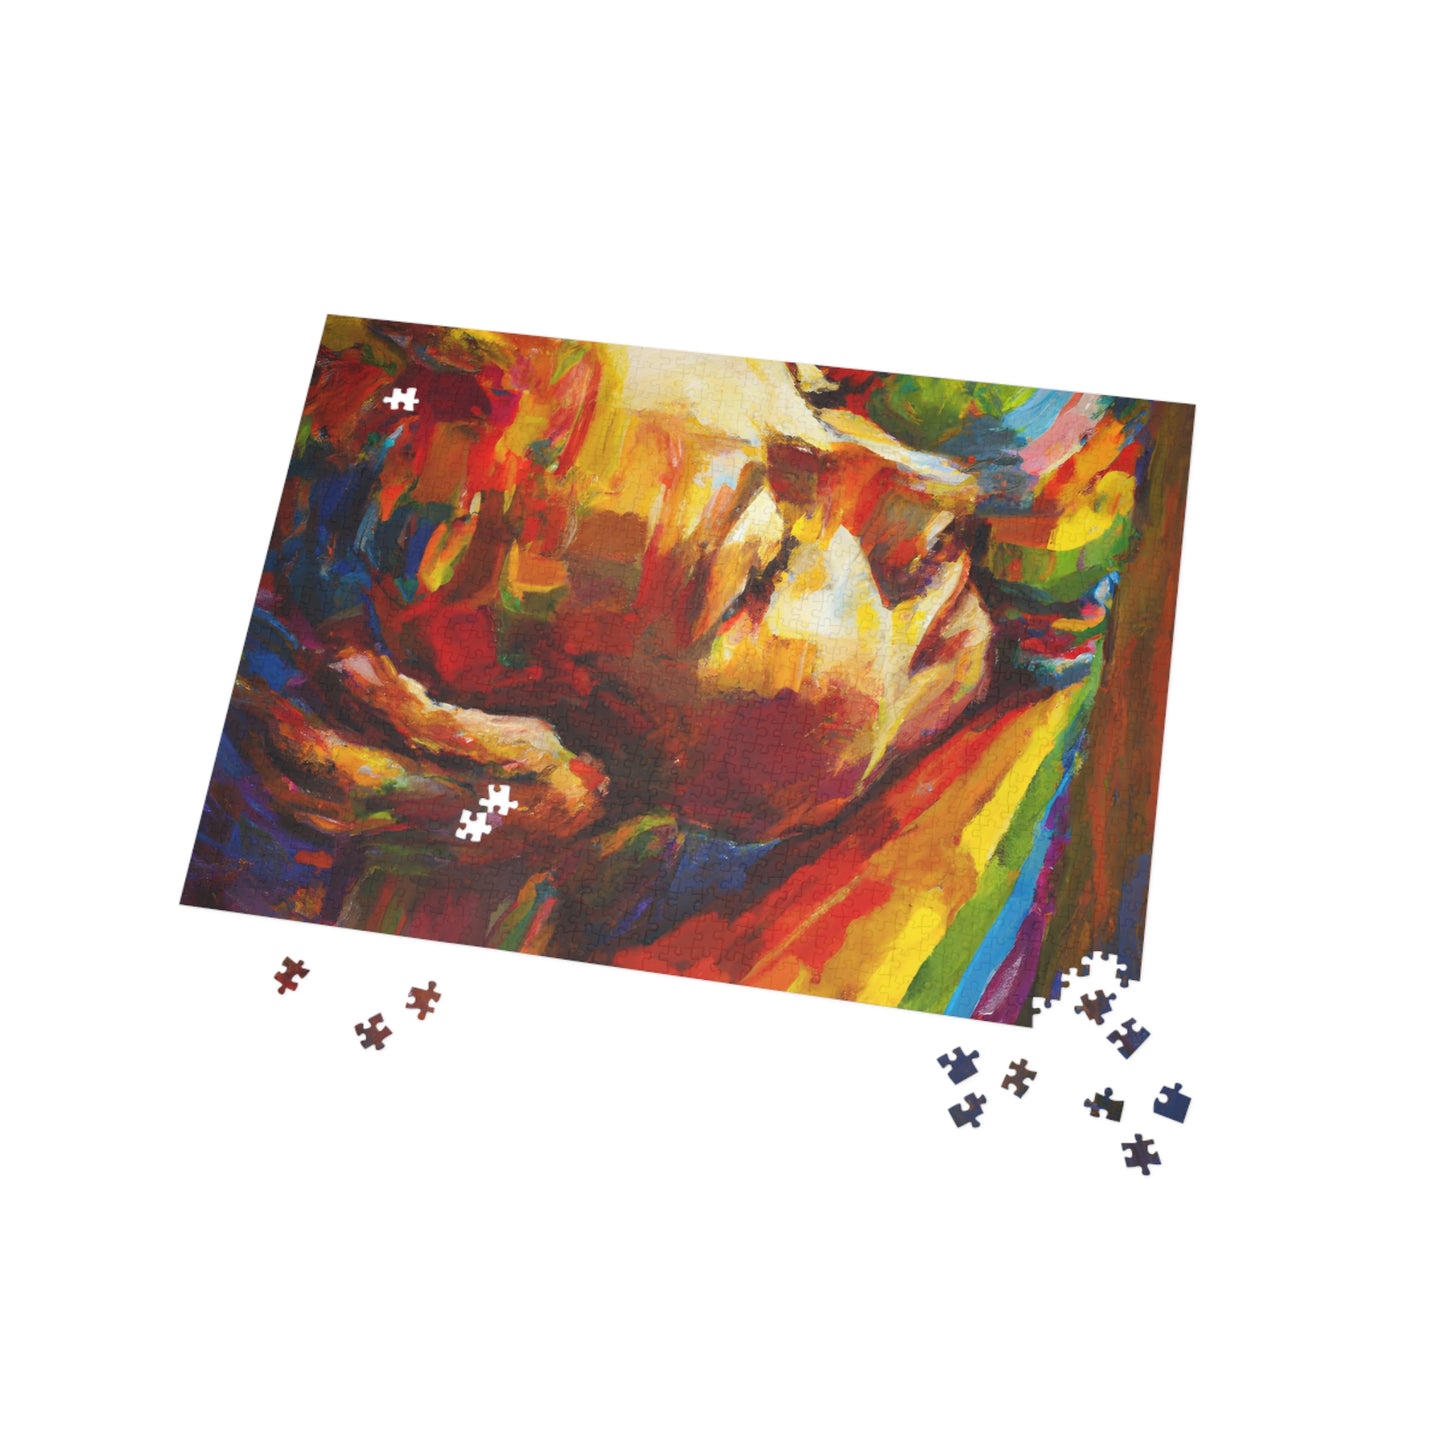 AuroraArtisan. - LGBTQ-Inspired Jigsaw Puzzle